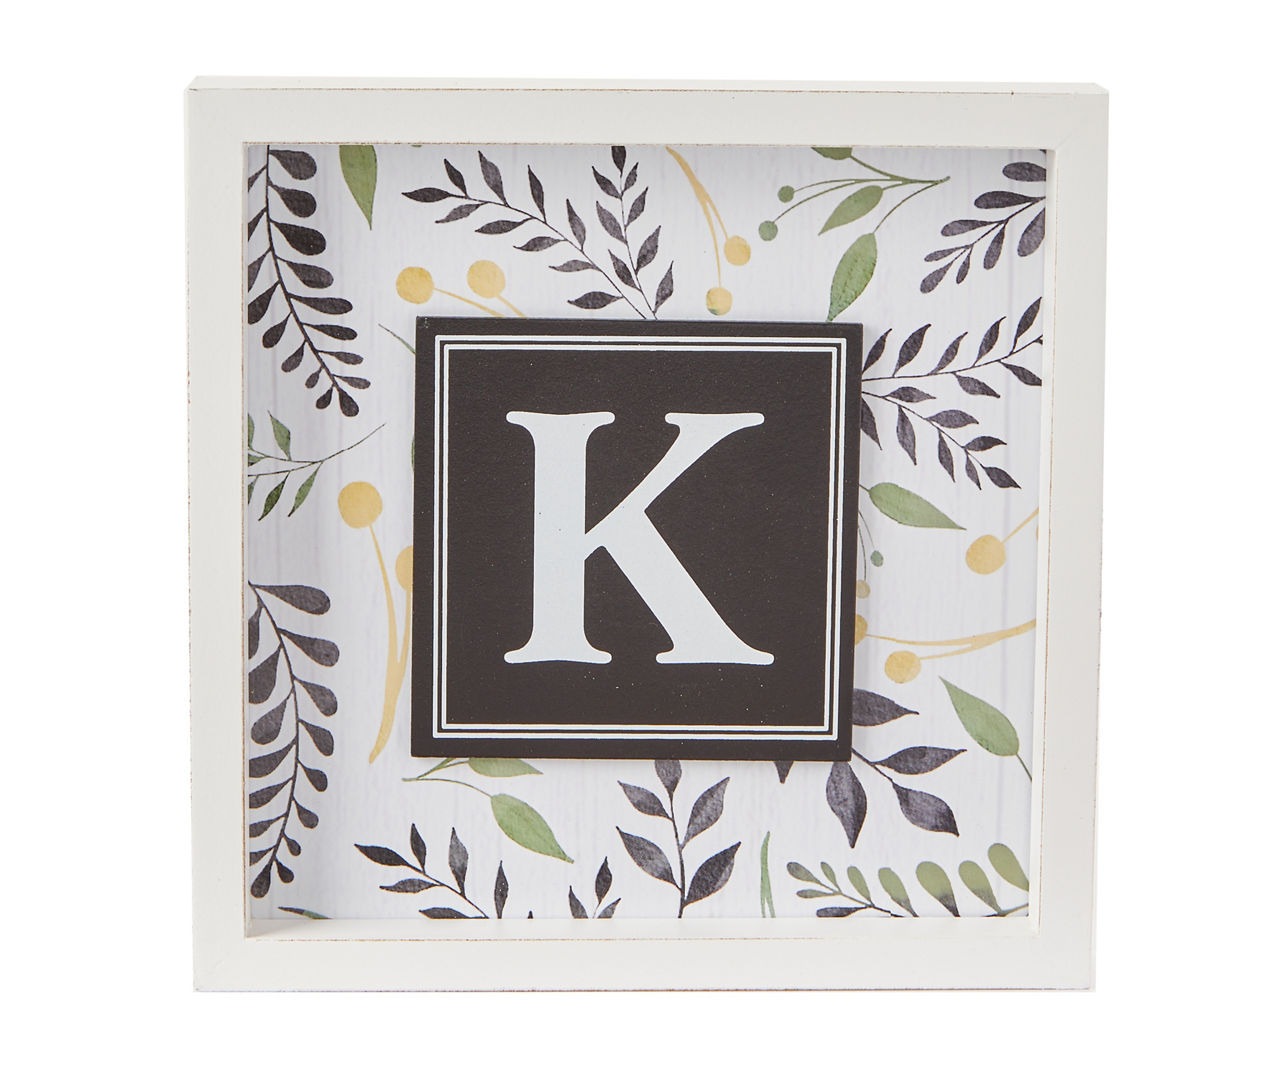 "K" White & Black Leaf Monogram Framed Wall Plaque